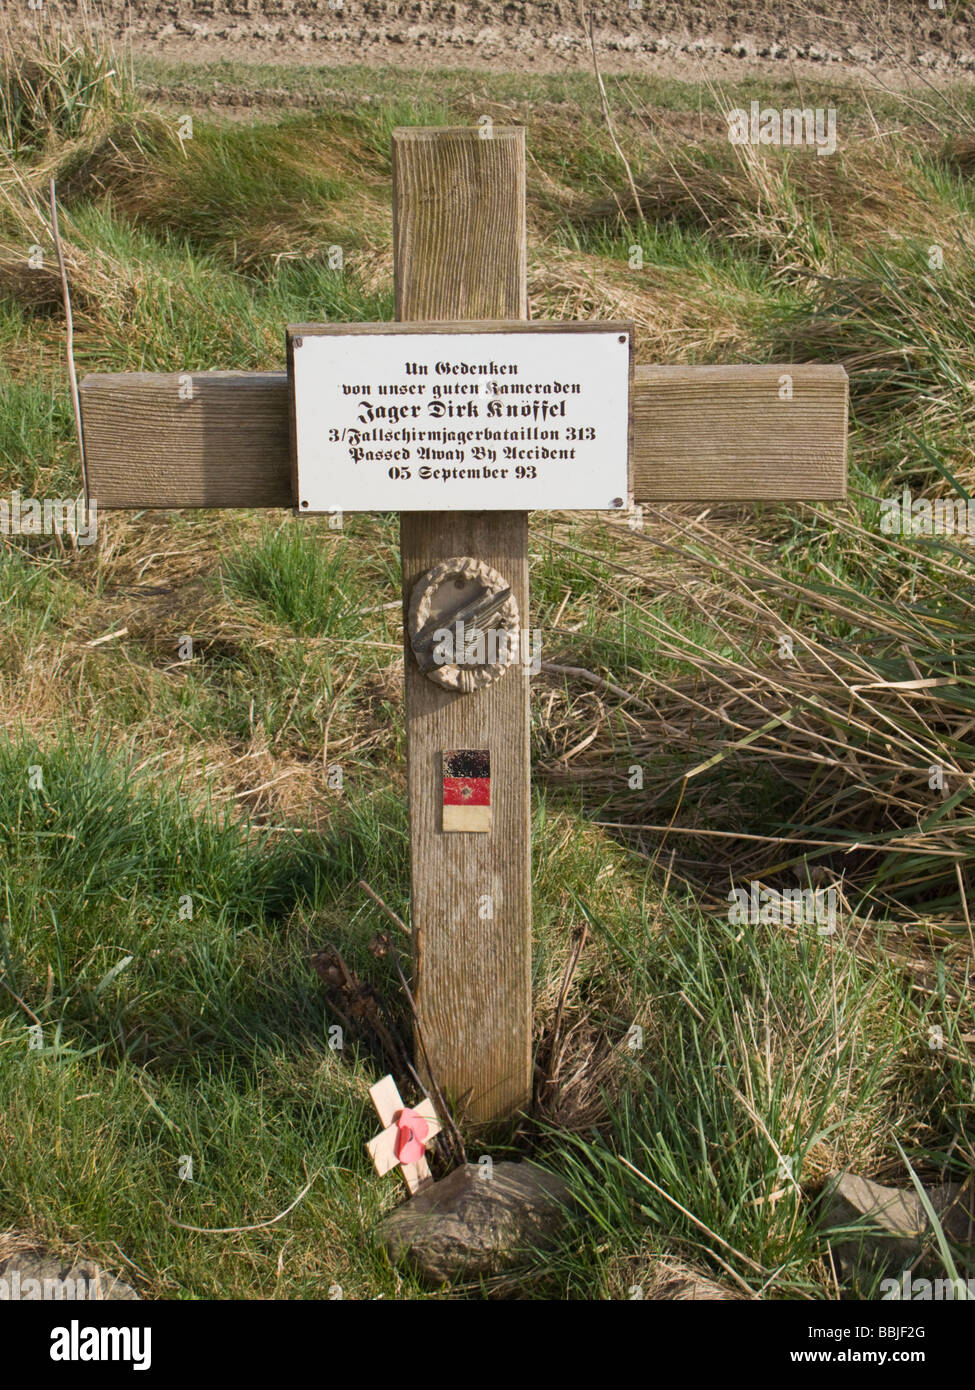 soldier killed salisbury plain - photo #21